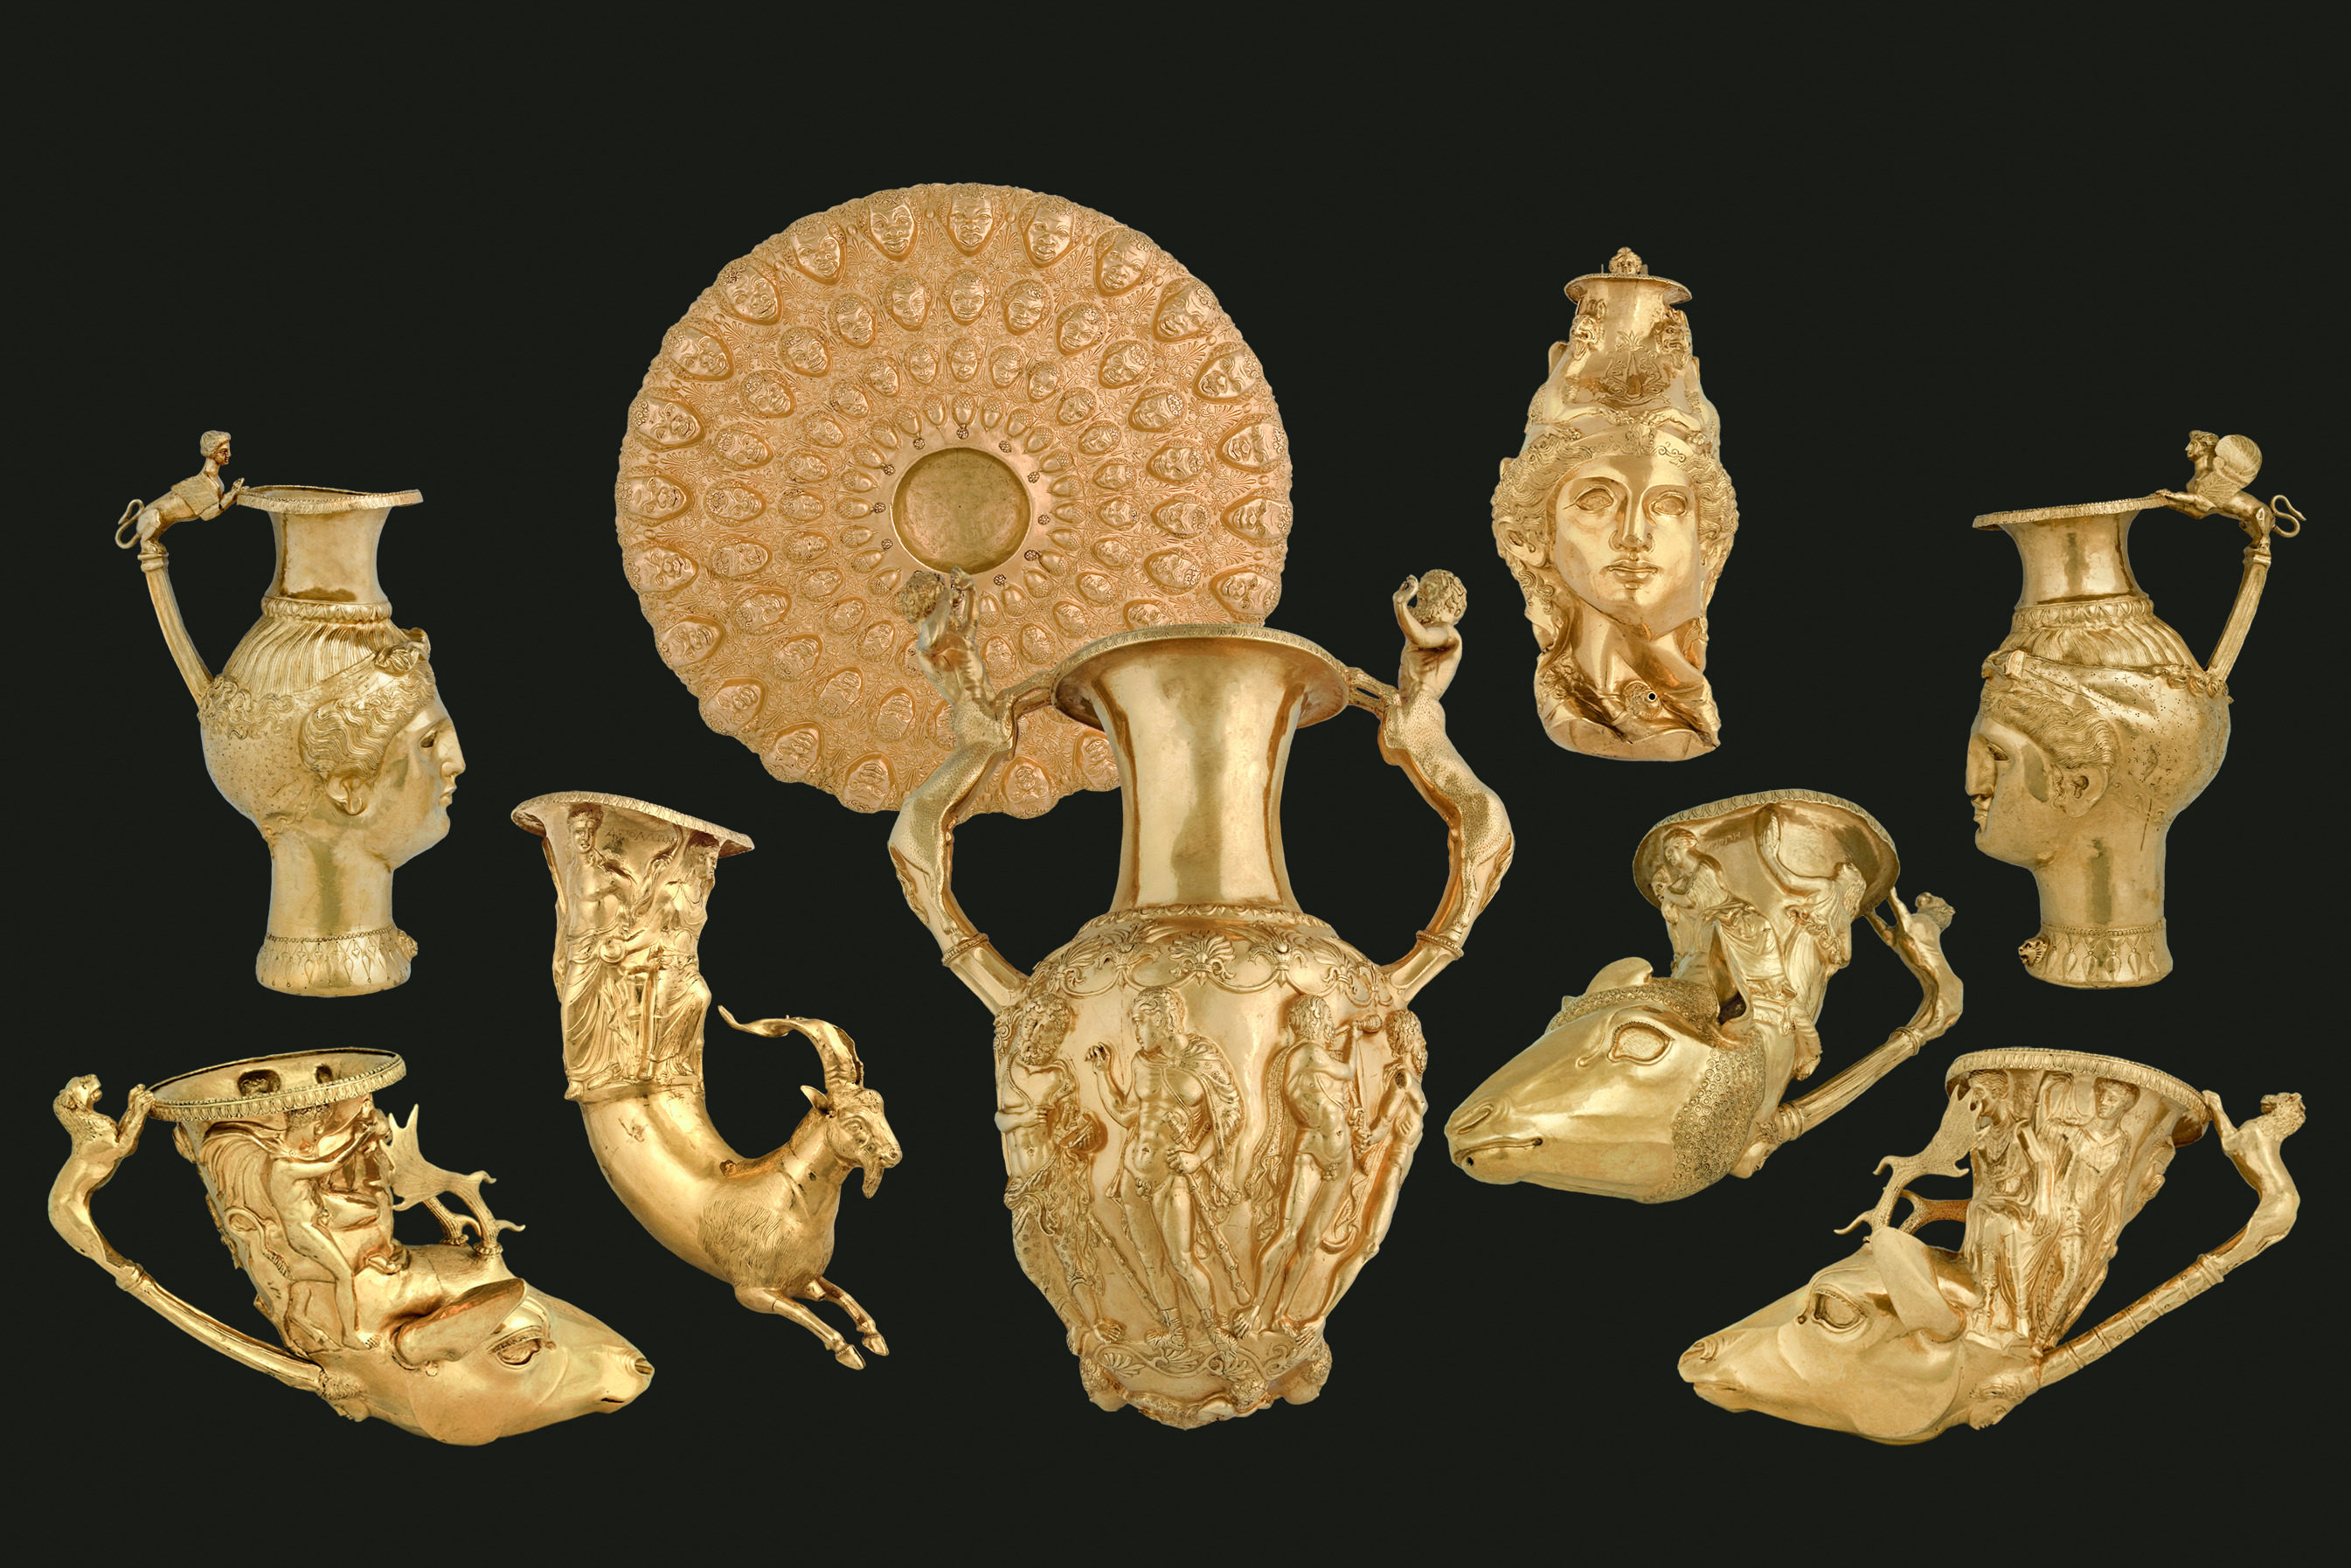 Panagyurishte Treasure from Bulgaria with nine gold vases